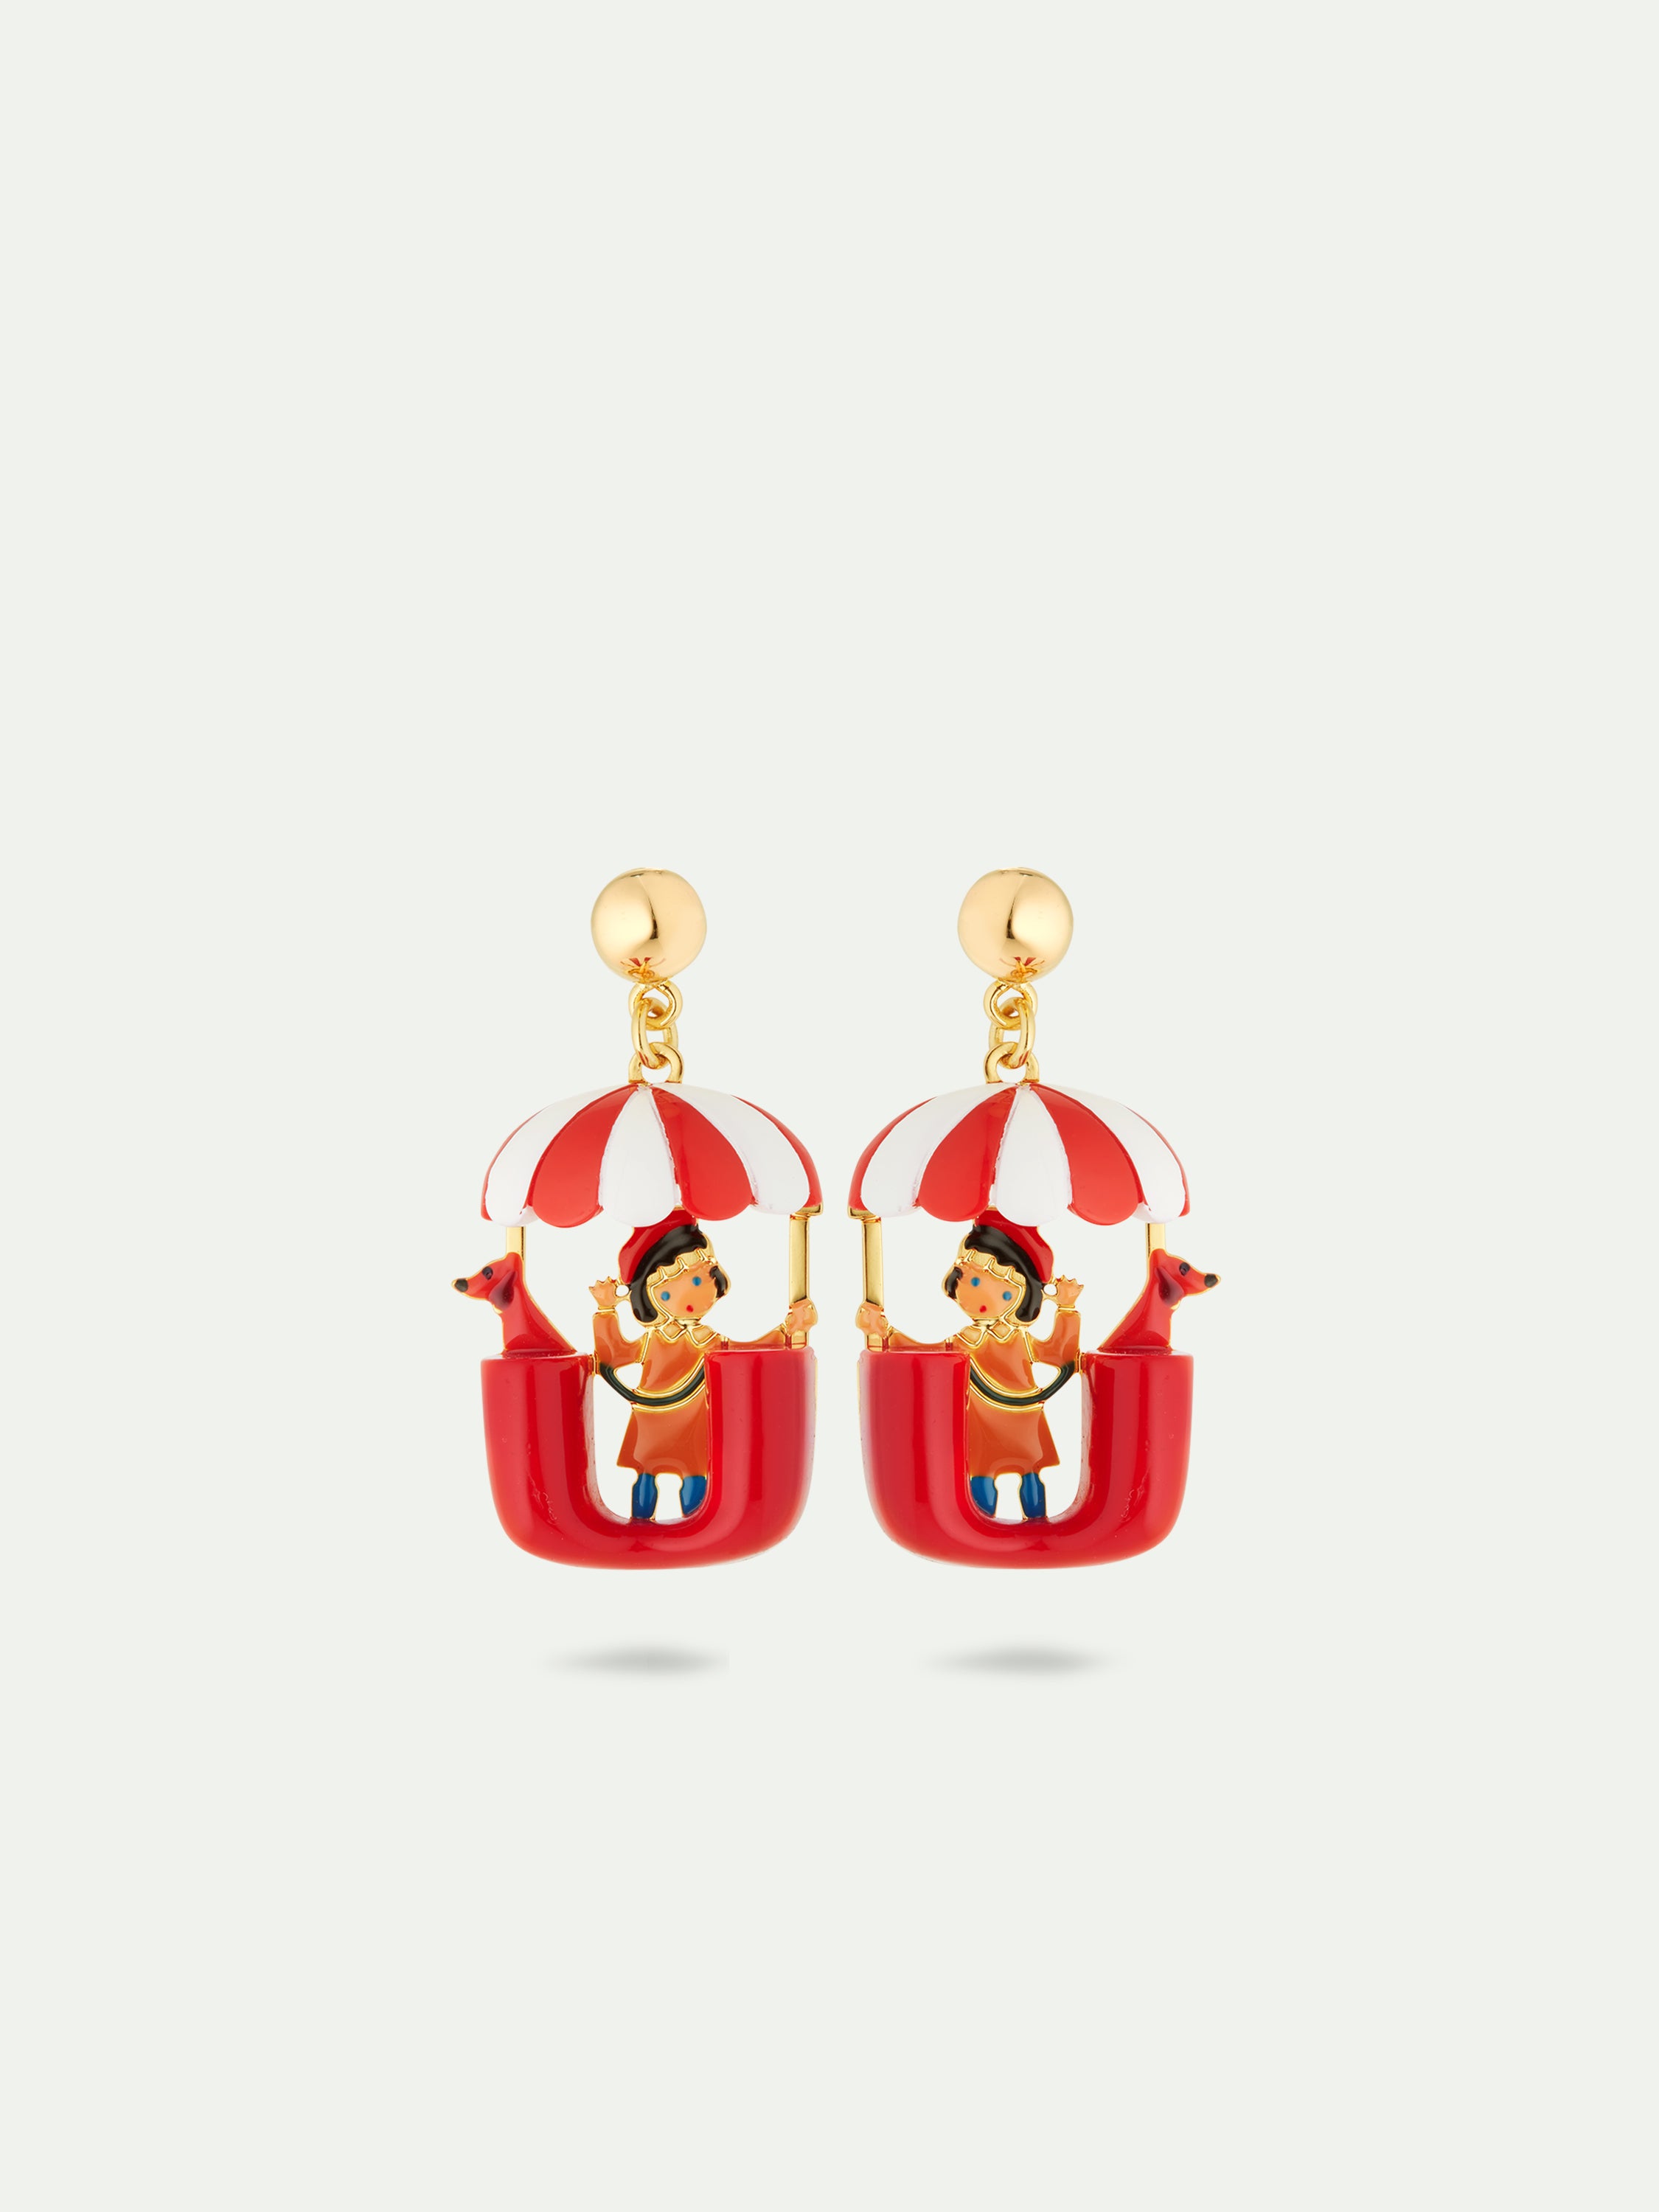 Little girl and dachshund on a ferris wheel earrings